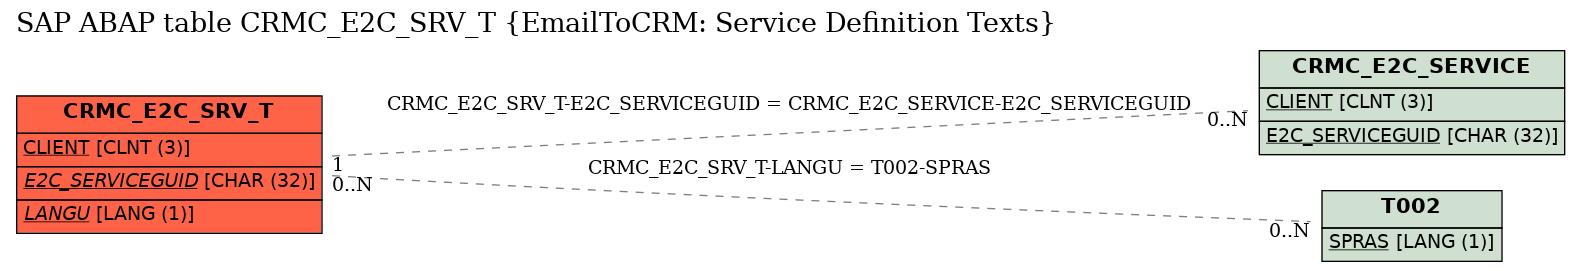 E-R Diagram for table CRMC_E2C_SRV_T (EmailToCRM: Service Definition Texts)